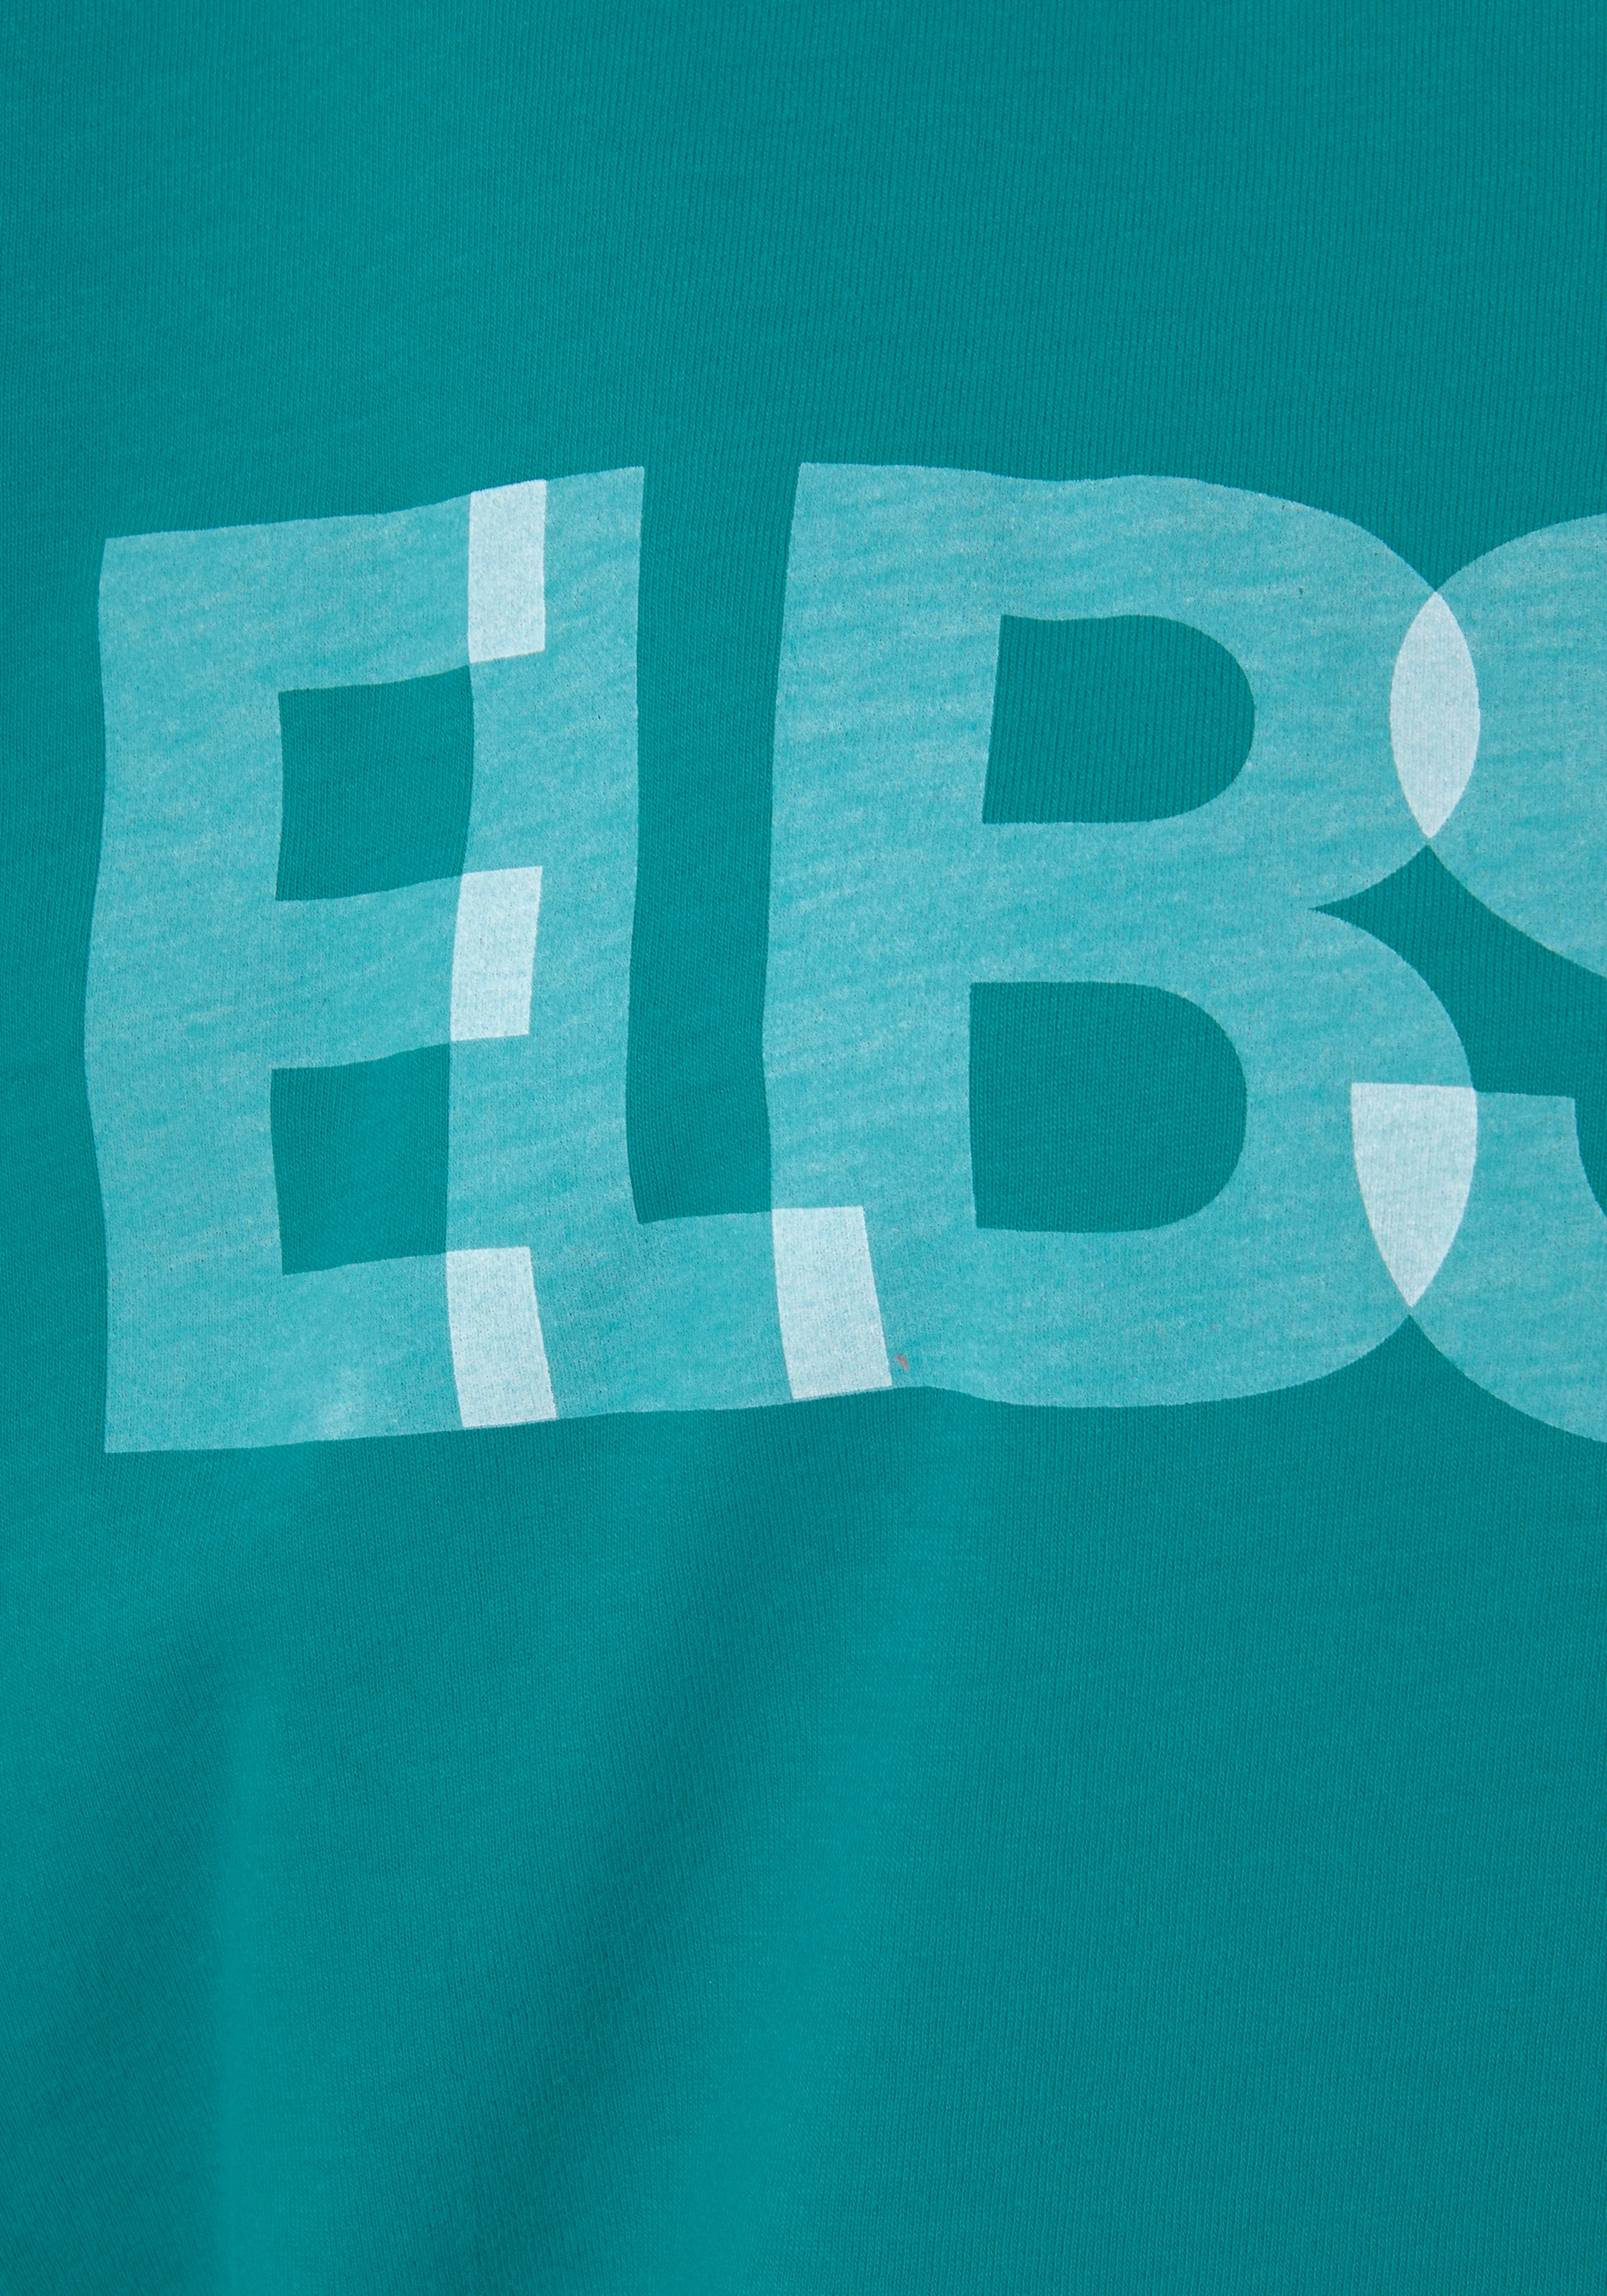 Elbsand Logodruck, Passform Baumwoll-Mix, 3/4-Arm-Shirt, shoppen lockere mit